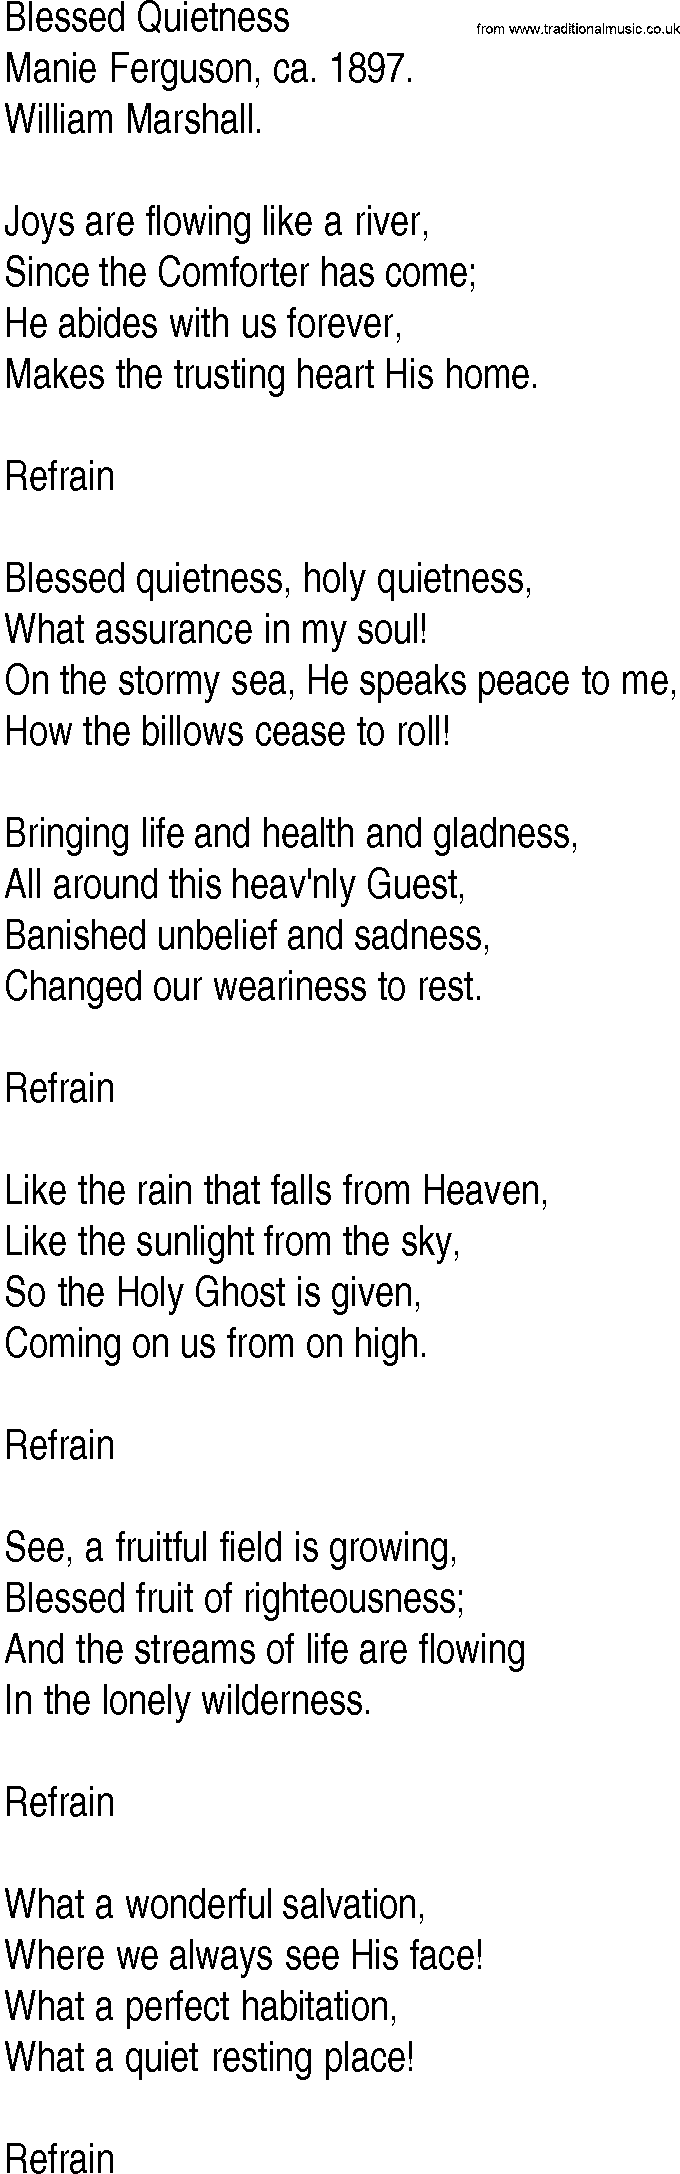 Hymn and Gospel Song: Blessed Quietness by Manie Ferguson ca lyrics